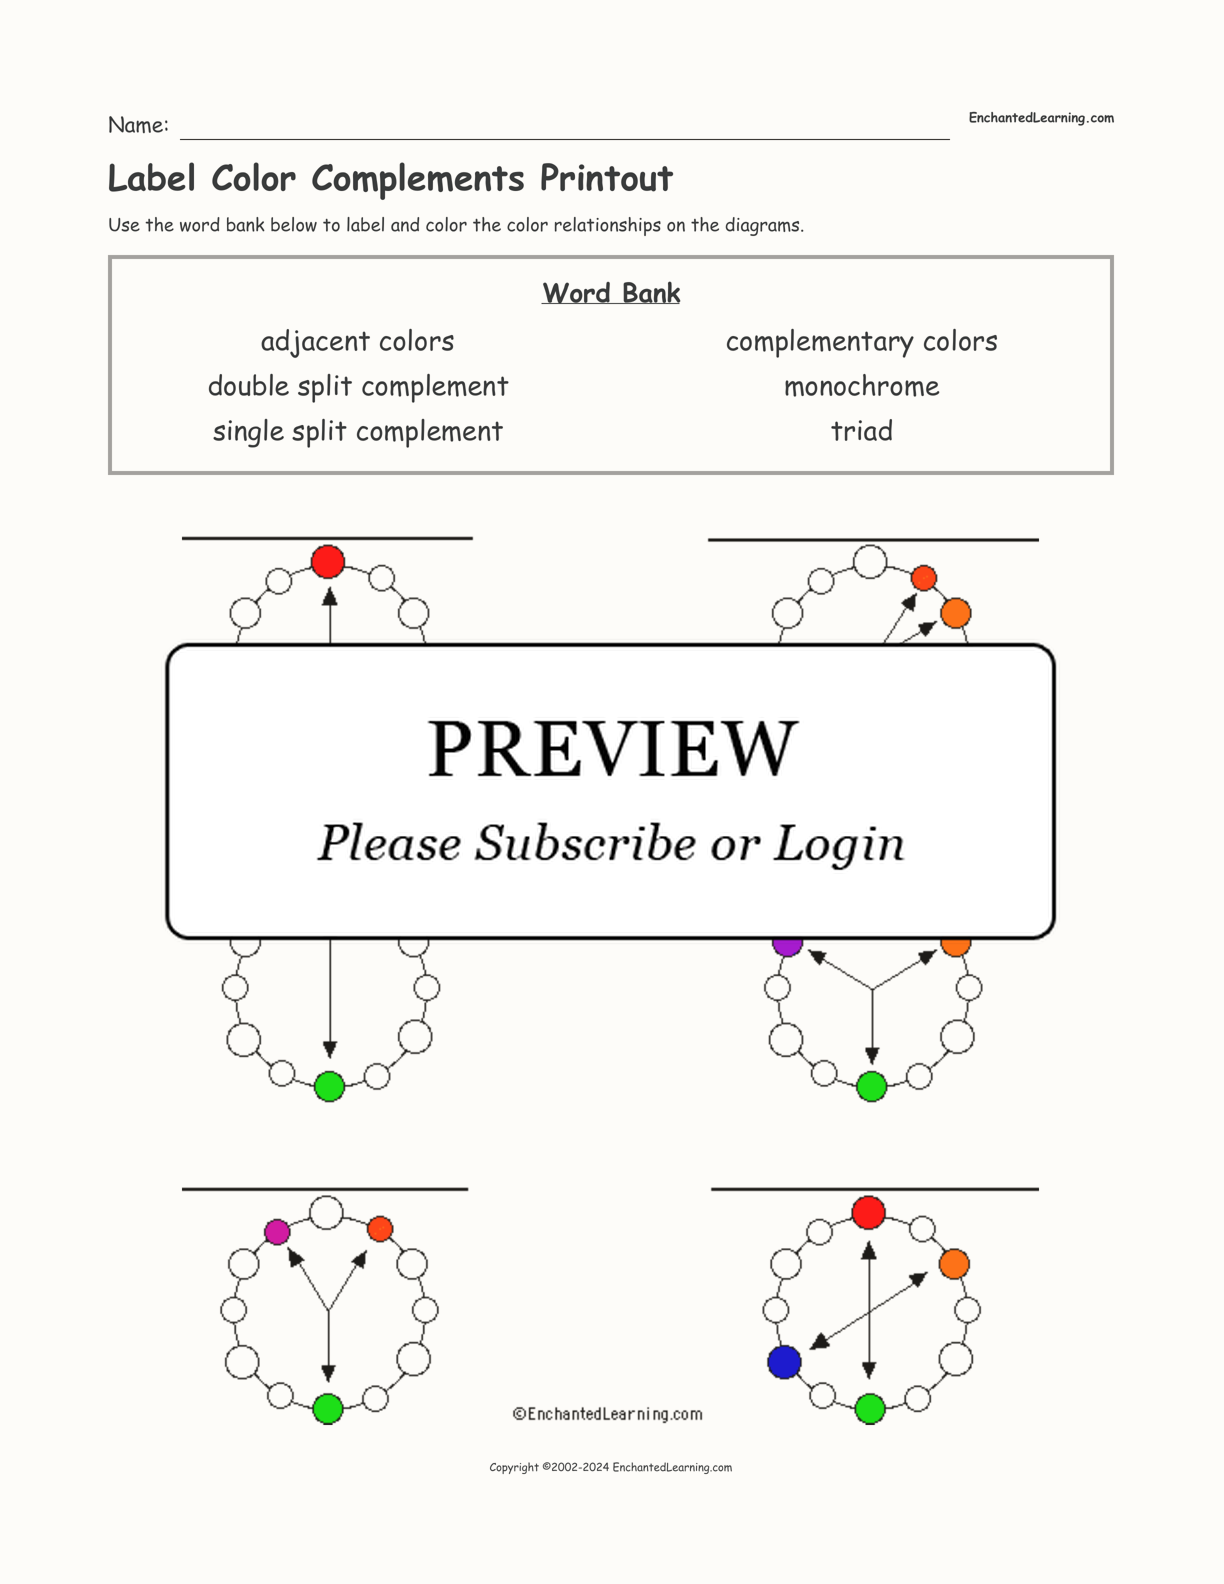 Label Color Complements Printout interactive worksheet page 1